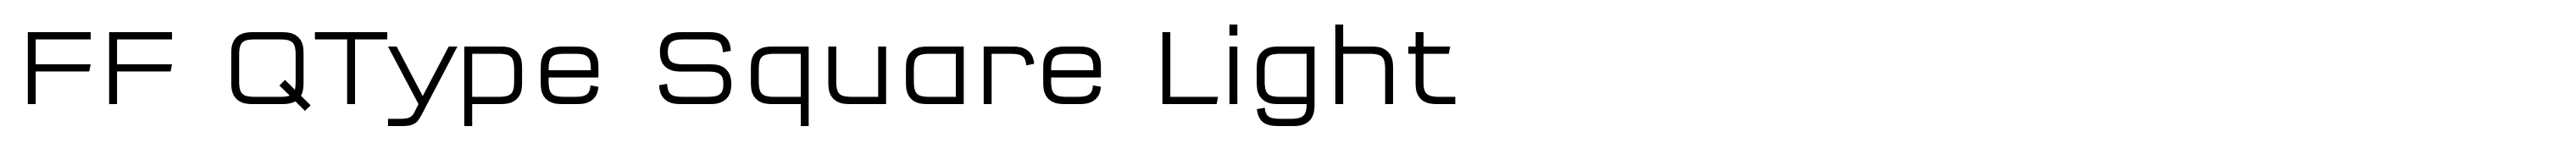 FF QType Square Light